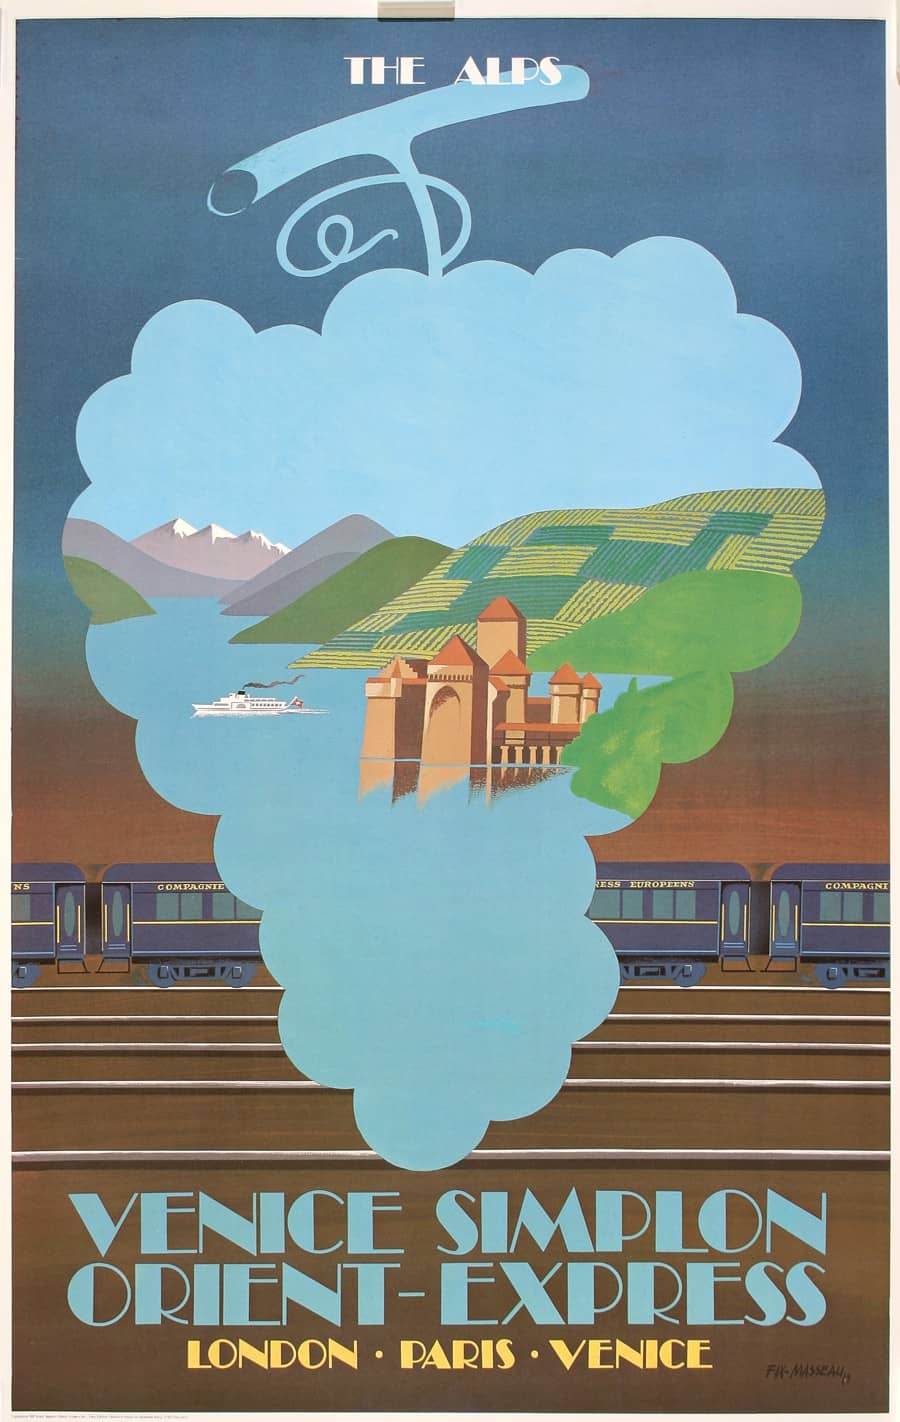 Venice Simplon ORIENT Express Poster - The Alps by Pierre Fix Masseau 1979 Large Format